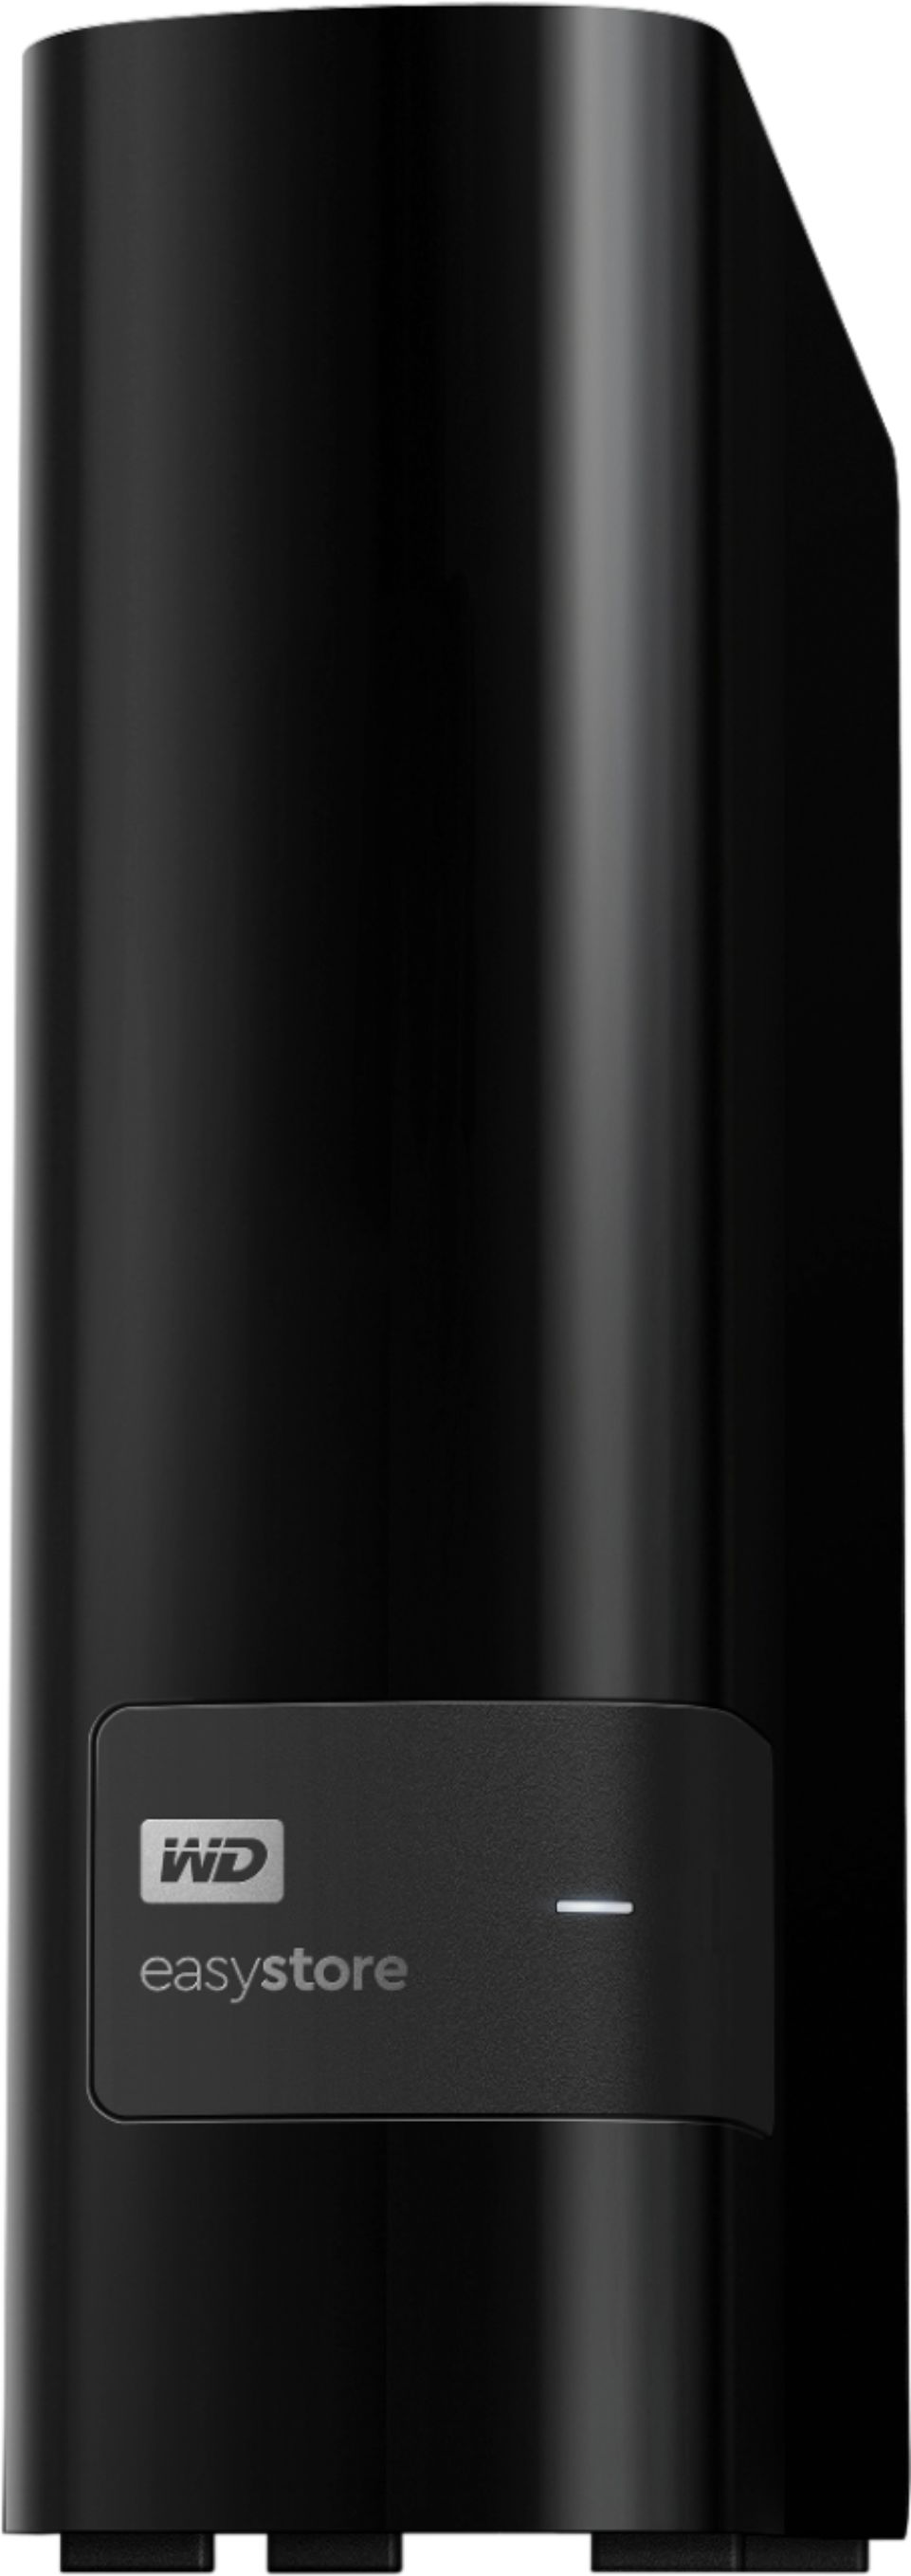 Left View: WD - easystore 8TB External USB 3.0 Hard Drive - Black